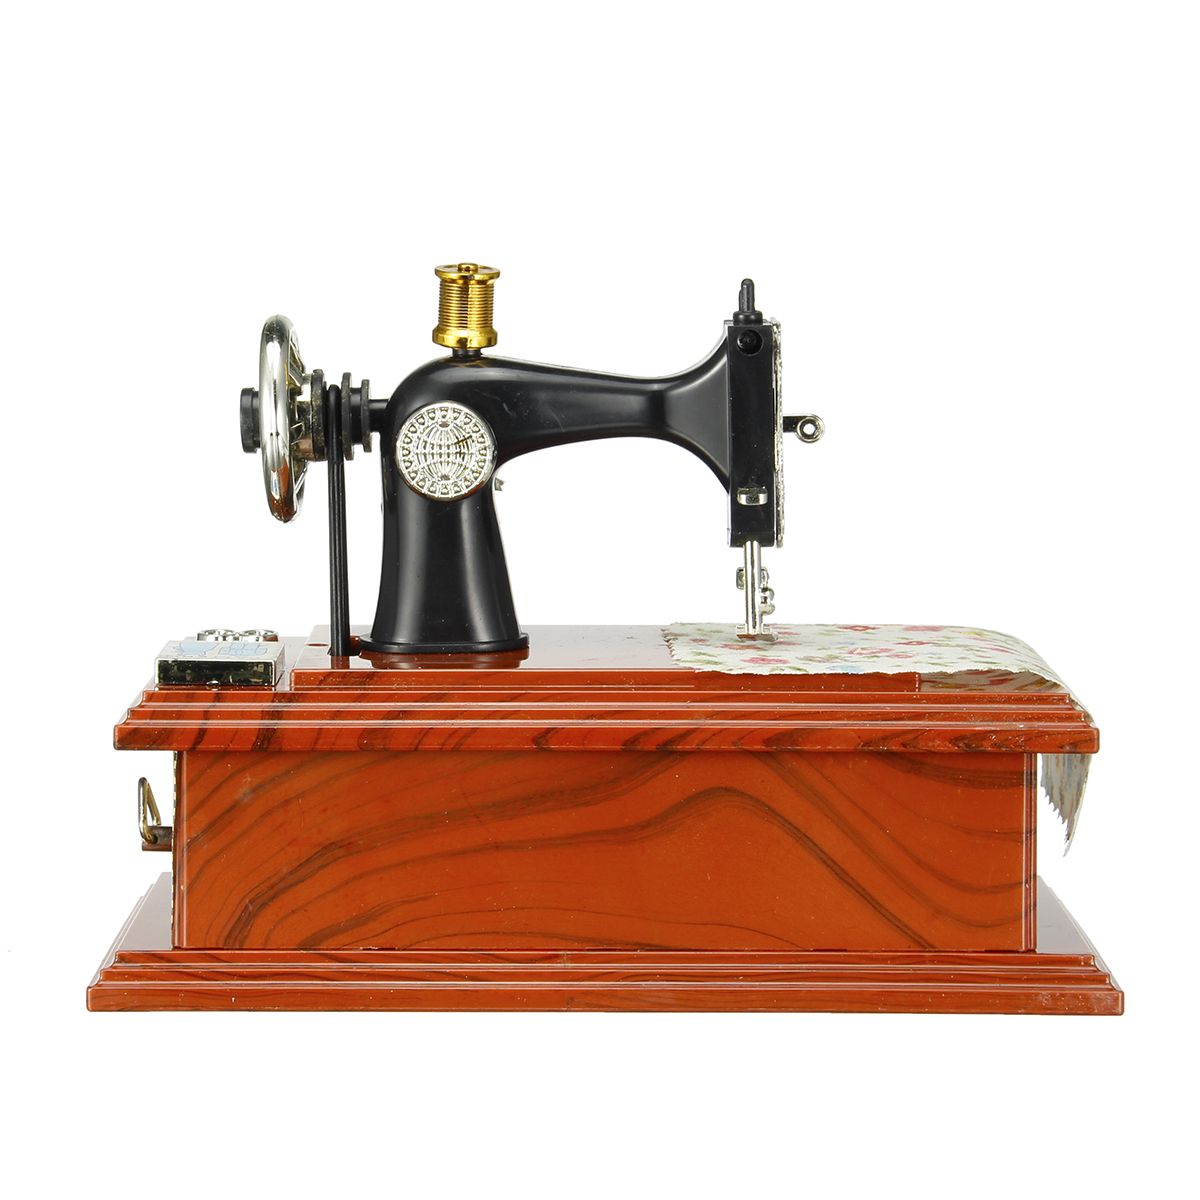 Mini-Sewing-Machine-Clockwork-Music-Box-Retro-Vintage-Table-Home-Decorations-1614825